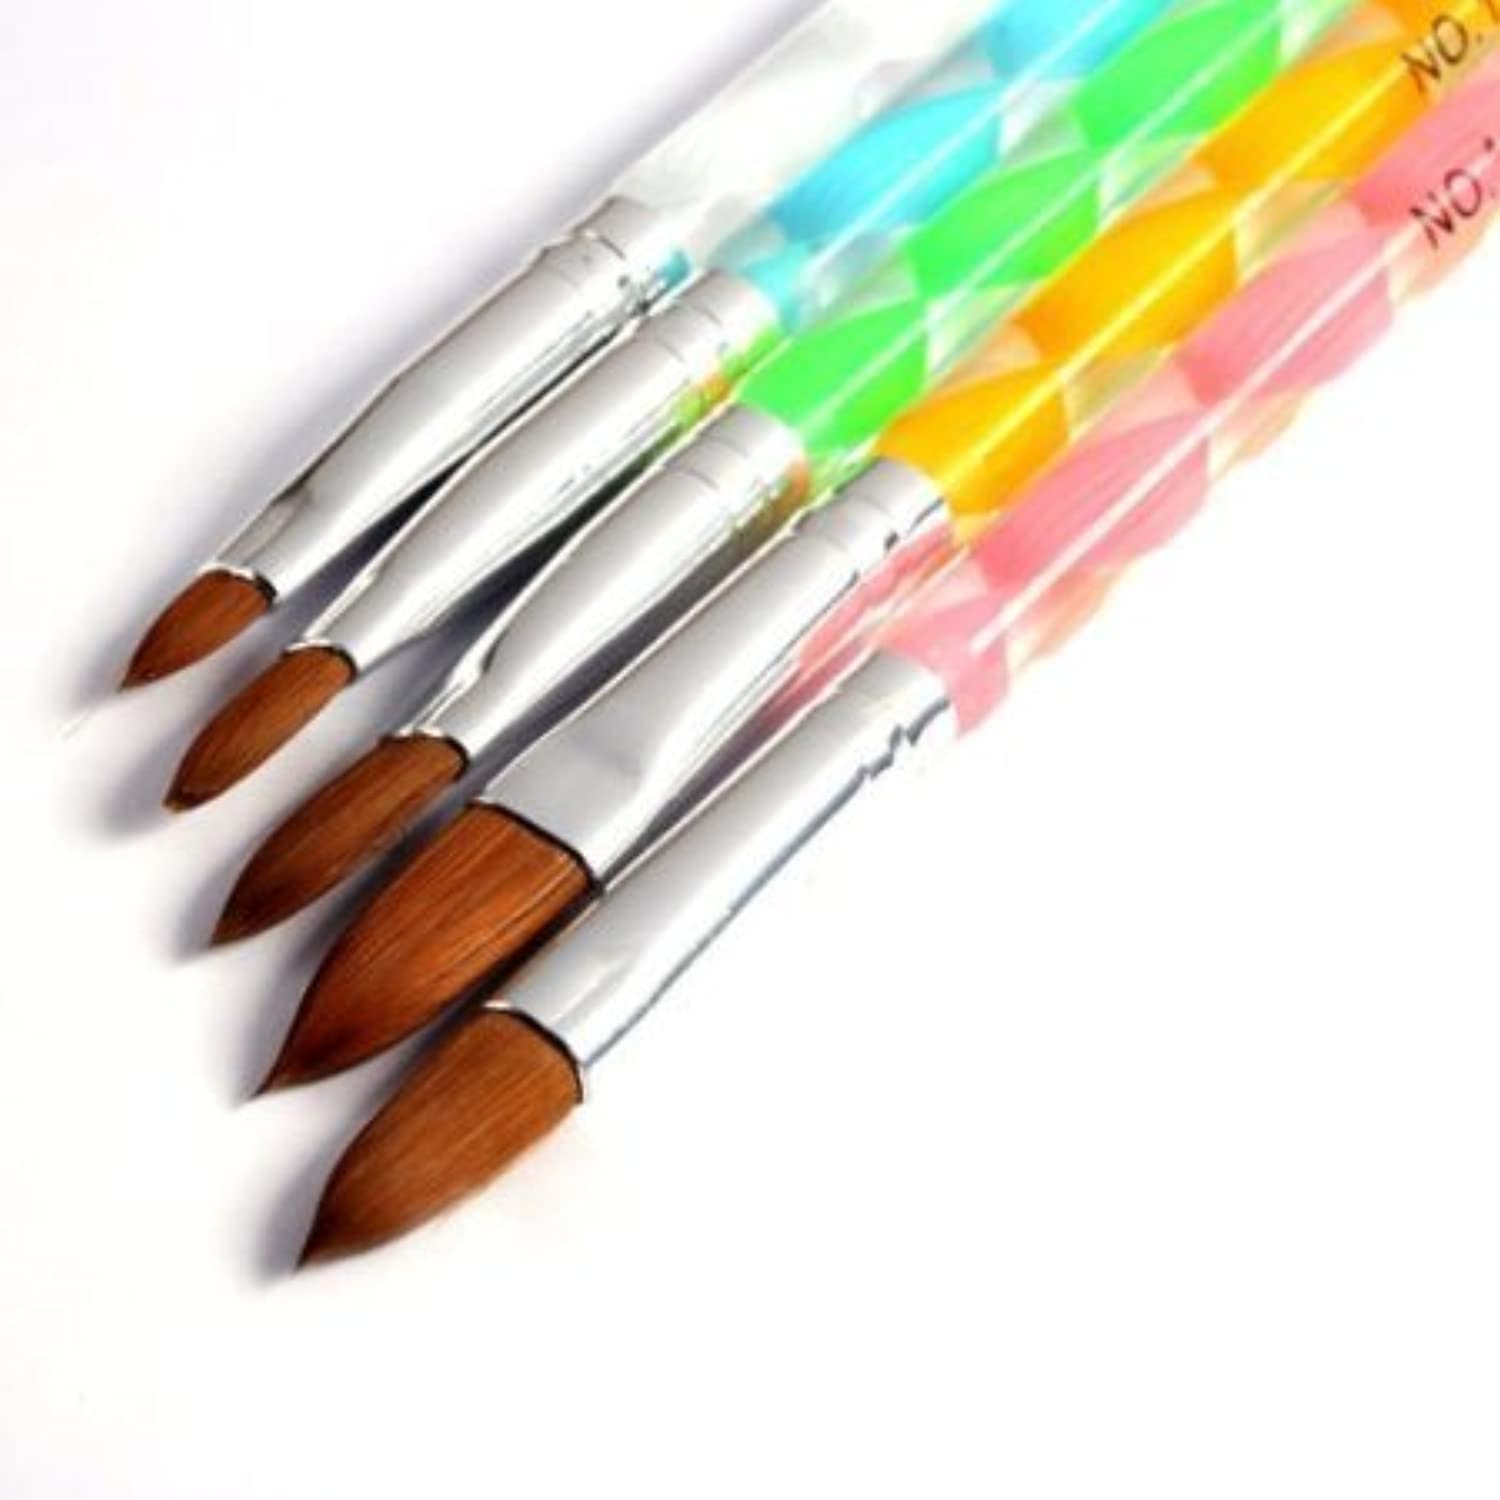 Nailart Makeup Kits 5pcs Acrylic Nail Art UV Gel Carving Pen Brush Liquid Powder DIY No. 2/4/6/8/10